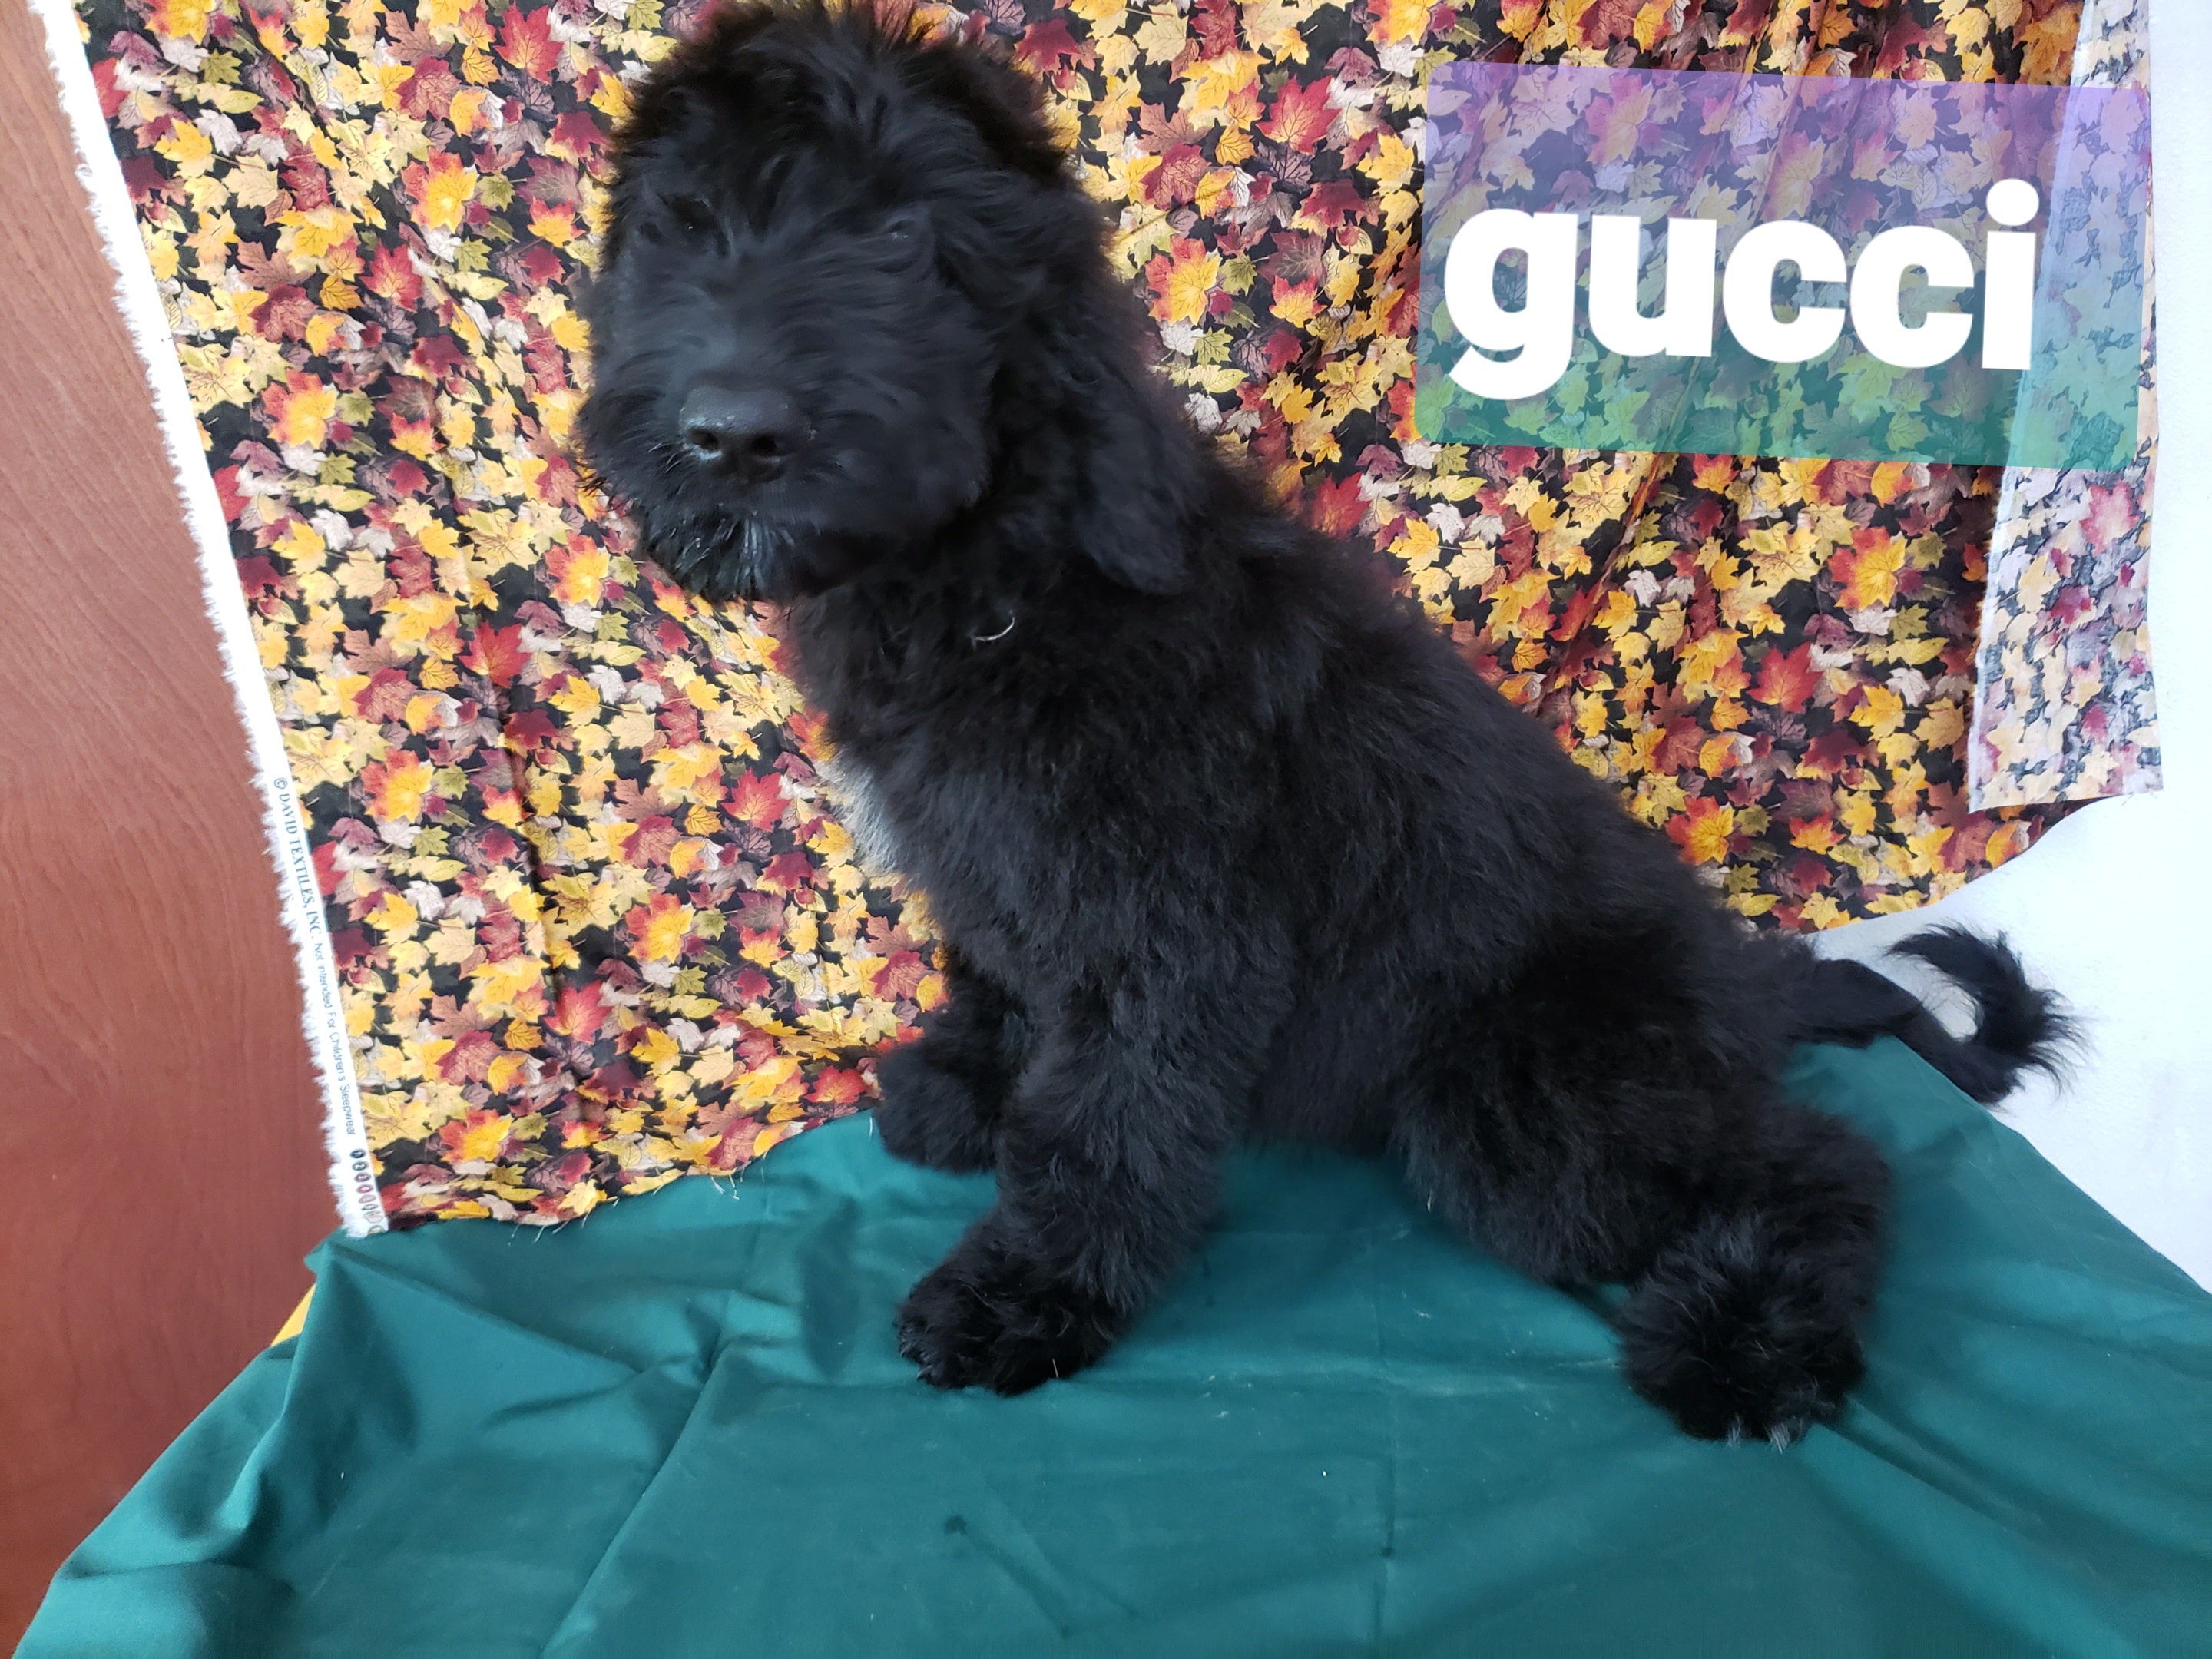 Gucci the Black Goldendoodle